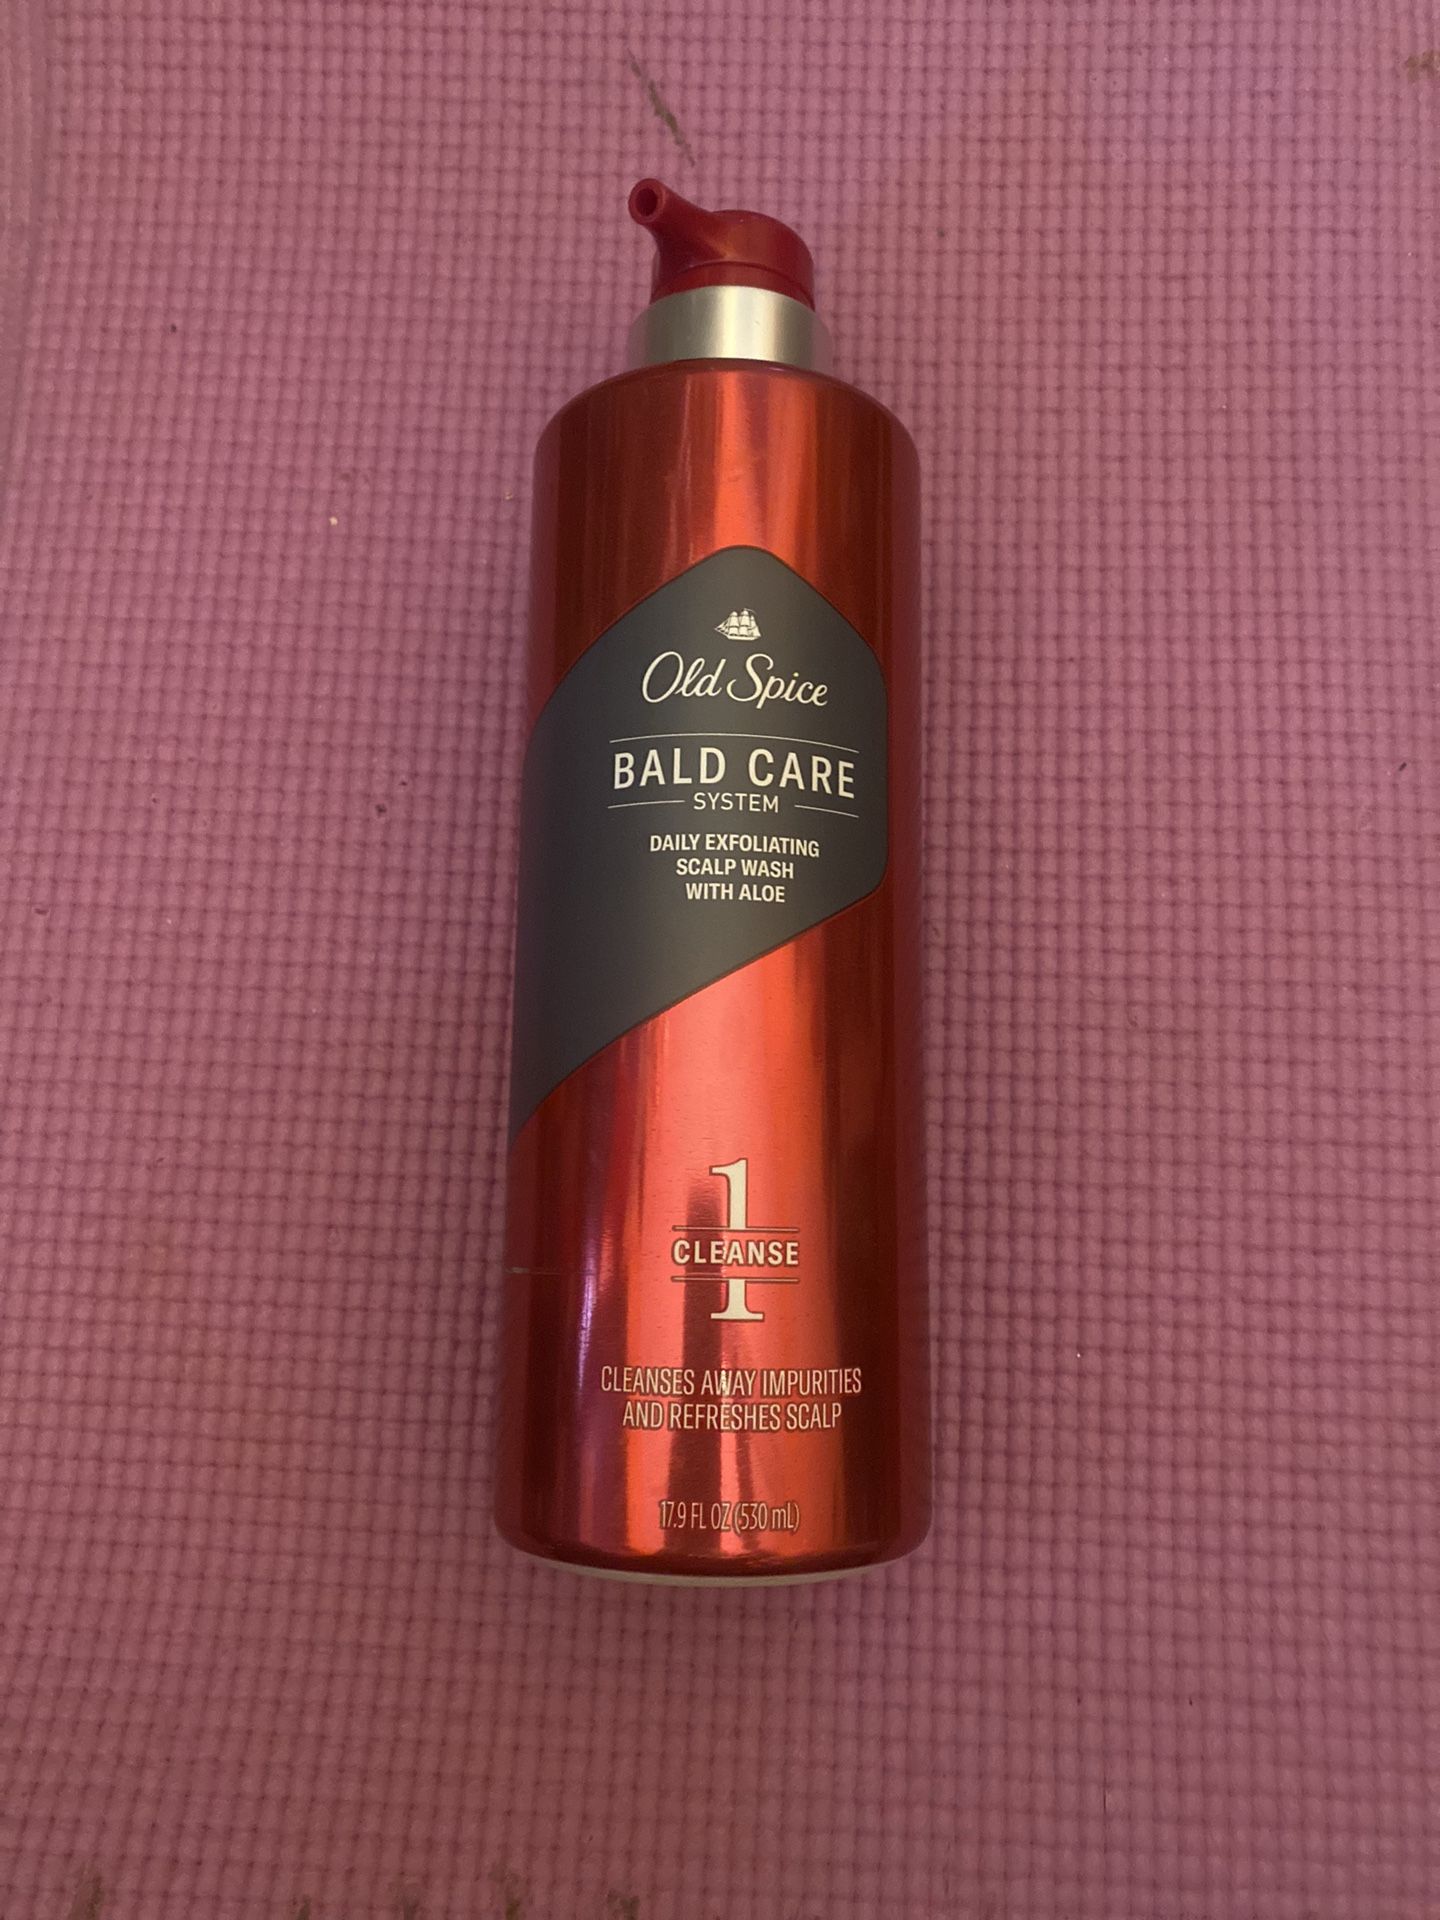 Old Spice bald Care Shampoo $6.00 